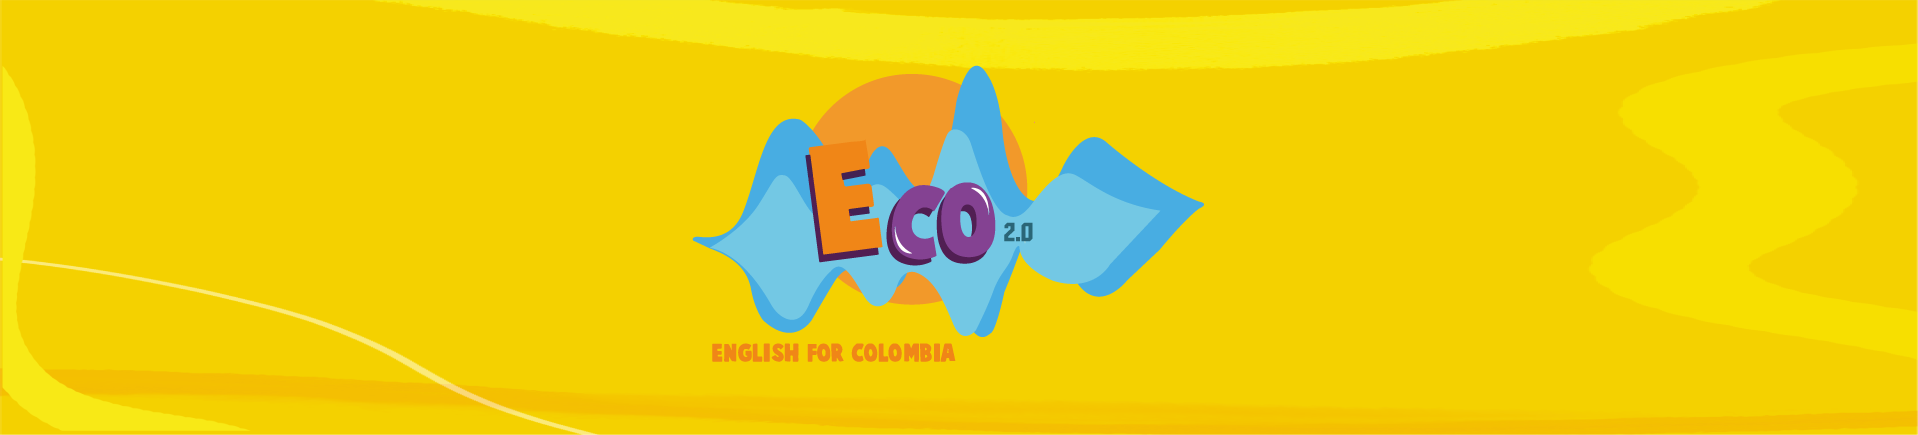 Eco 2.0